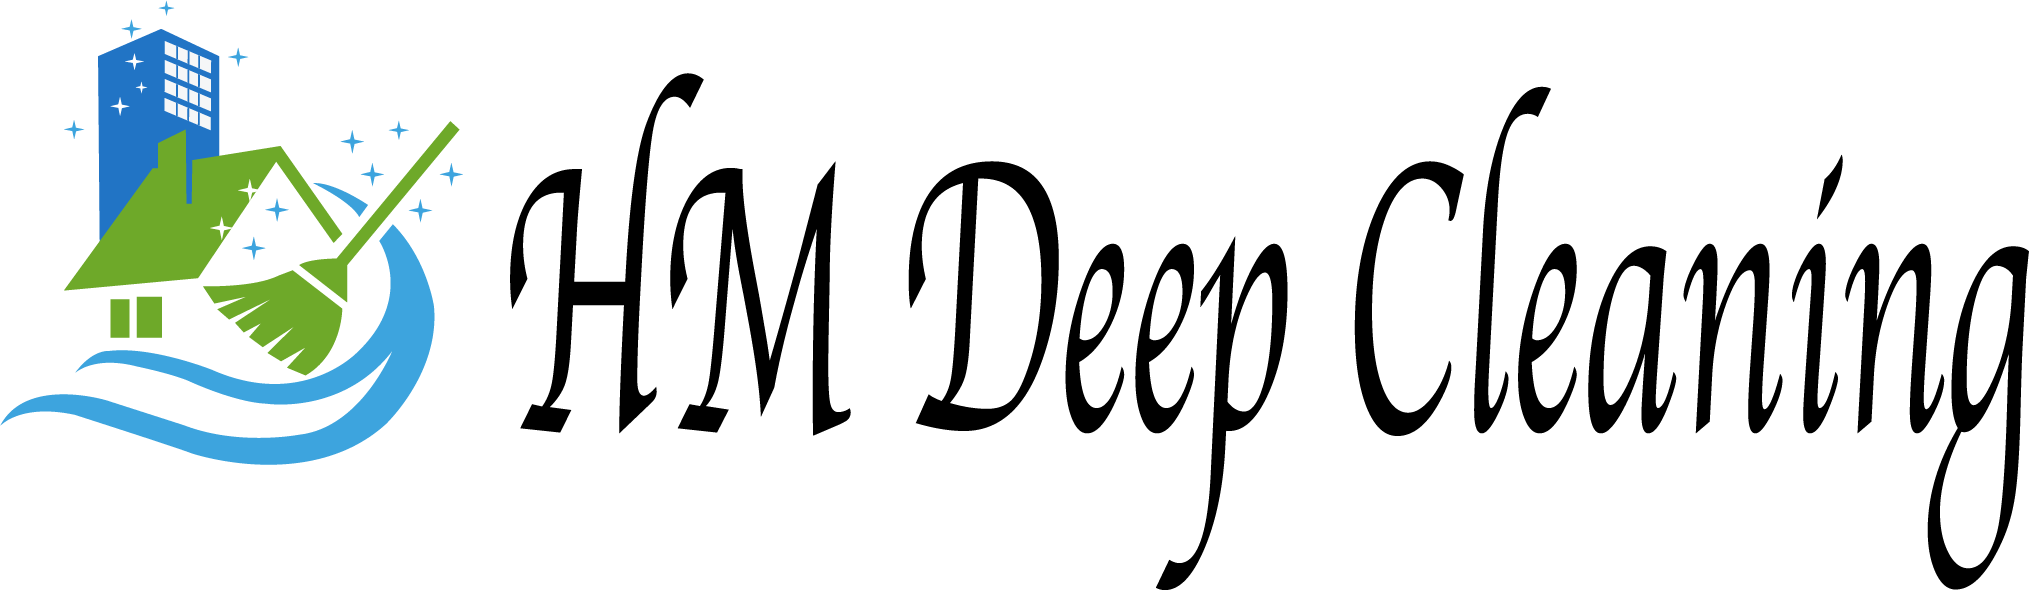 Hmdeepcleaner logo